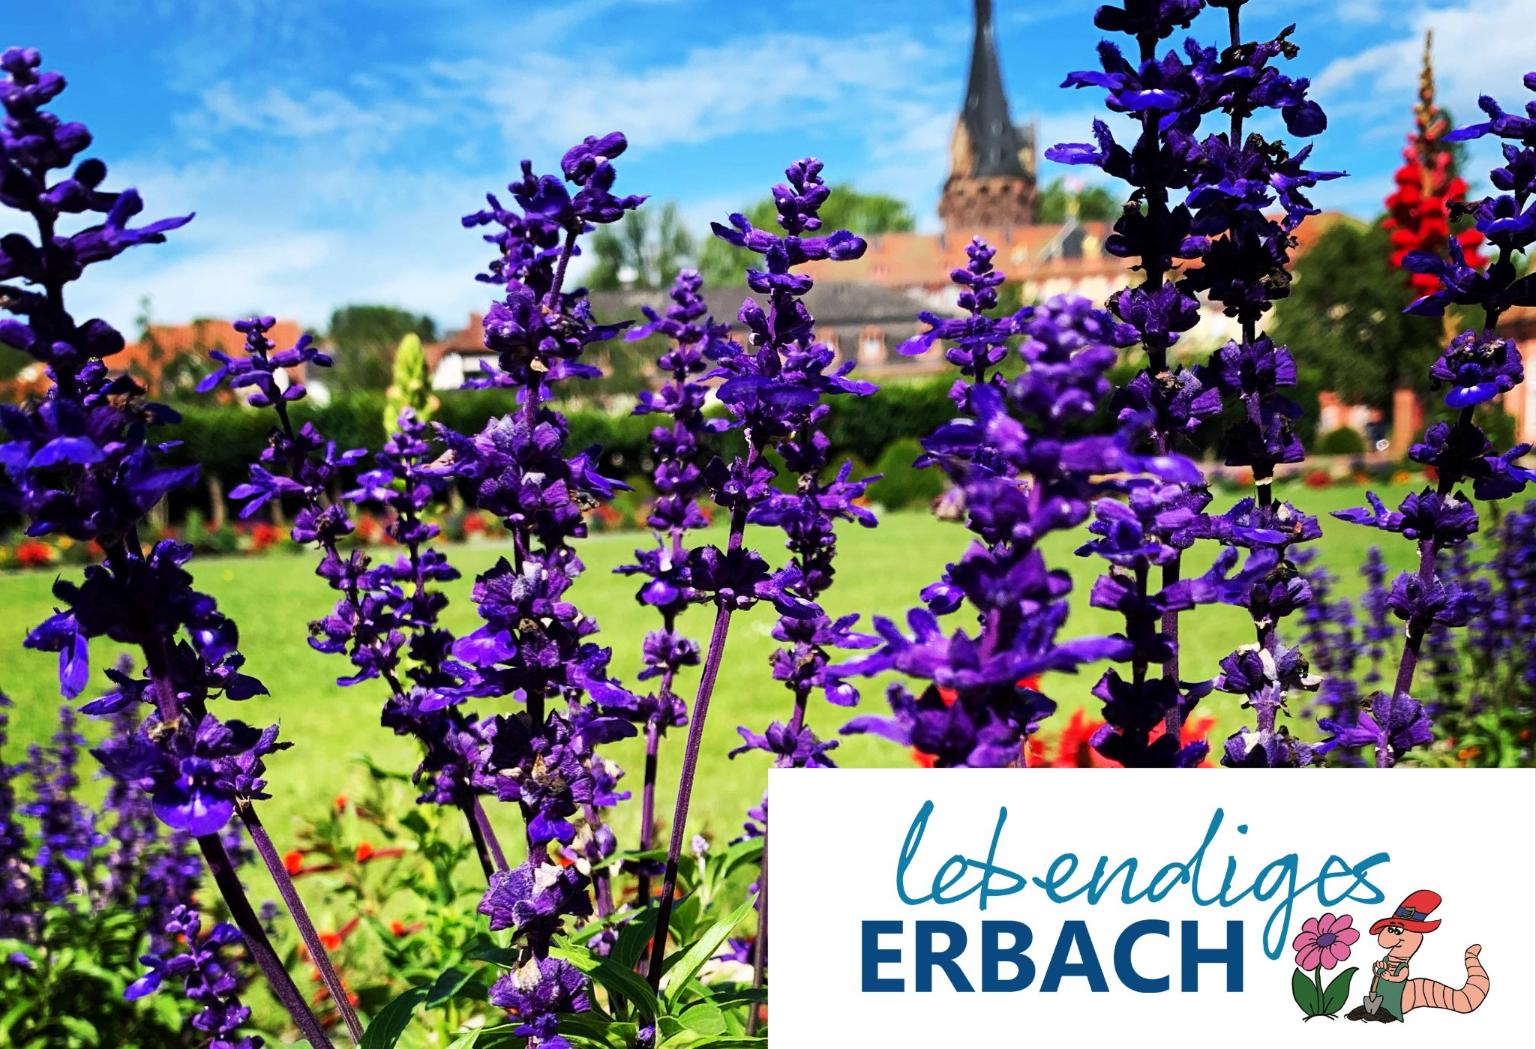 Lebendiges Erbach (c) Stadt Erbach